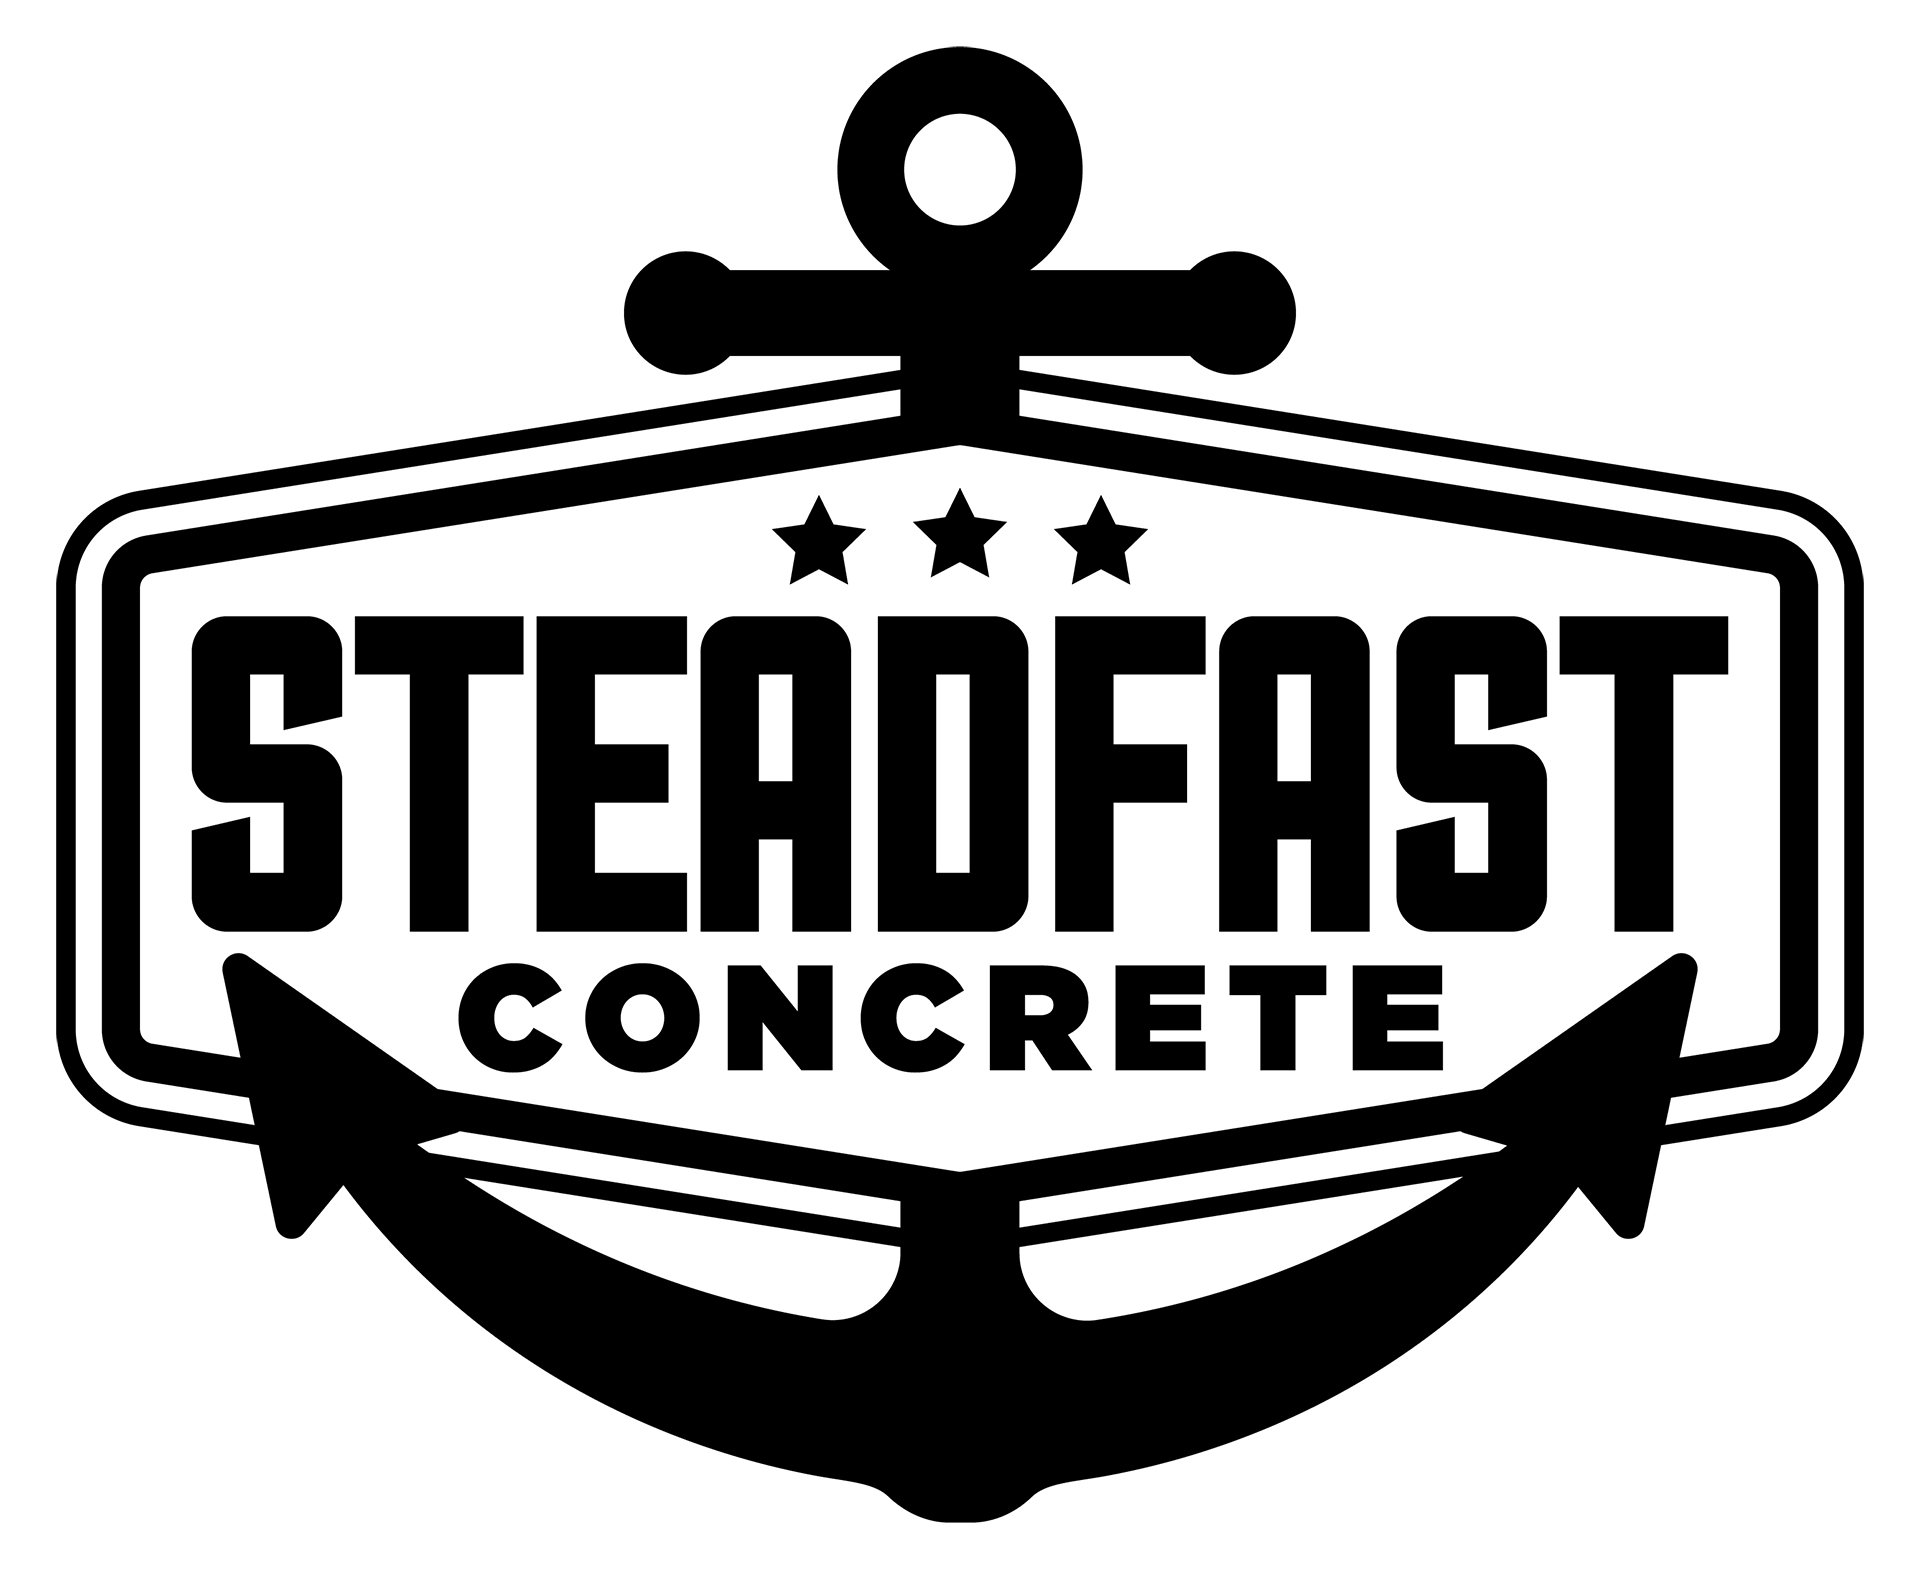 Steadfast-Concrete-Logo-Black.jpg